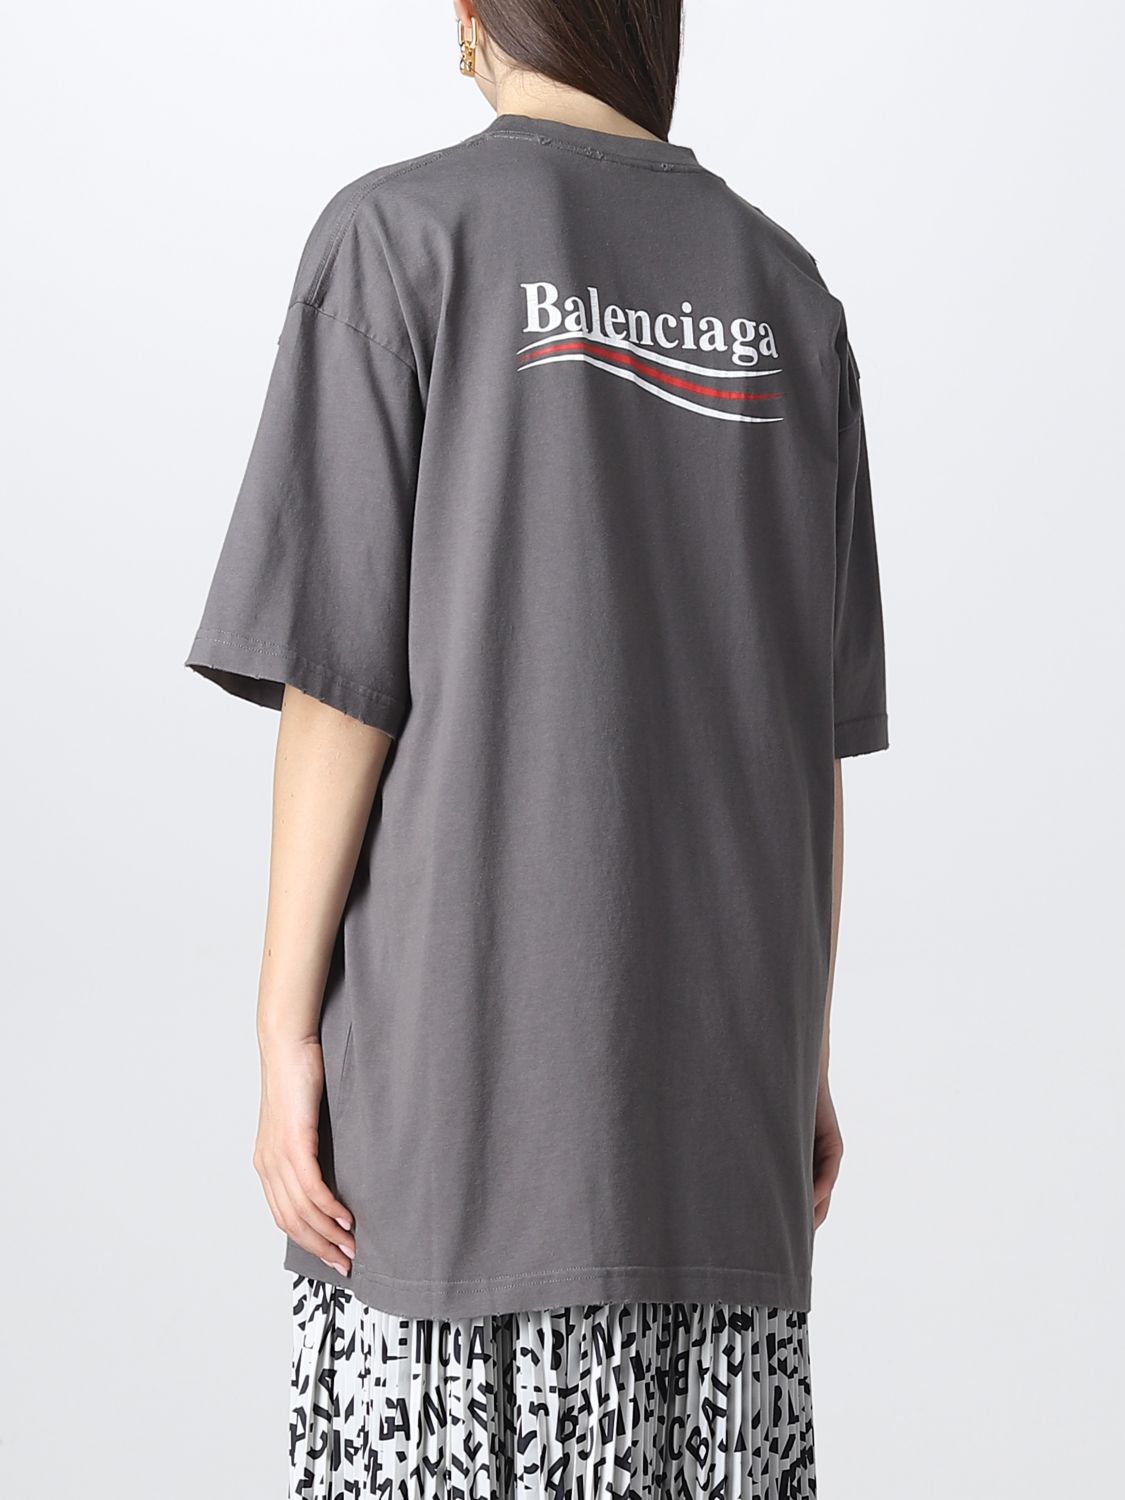 Balenciaga New Copyright Tshirt Gray Mens  US